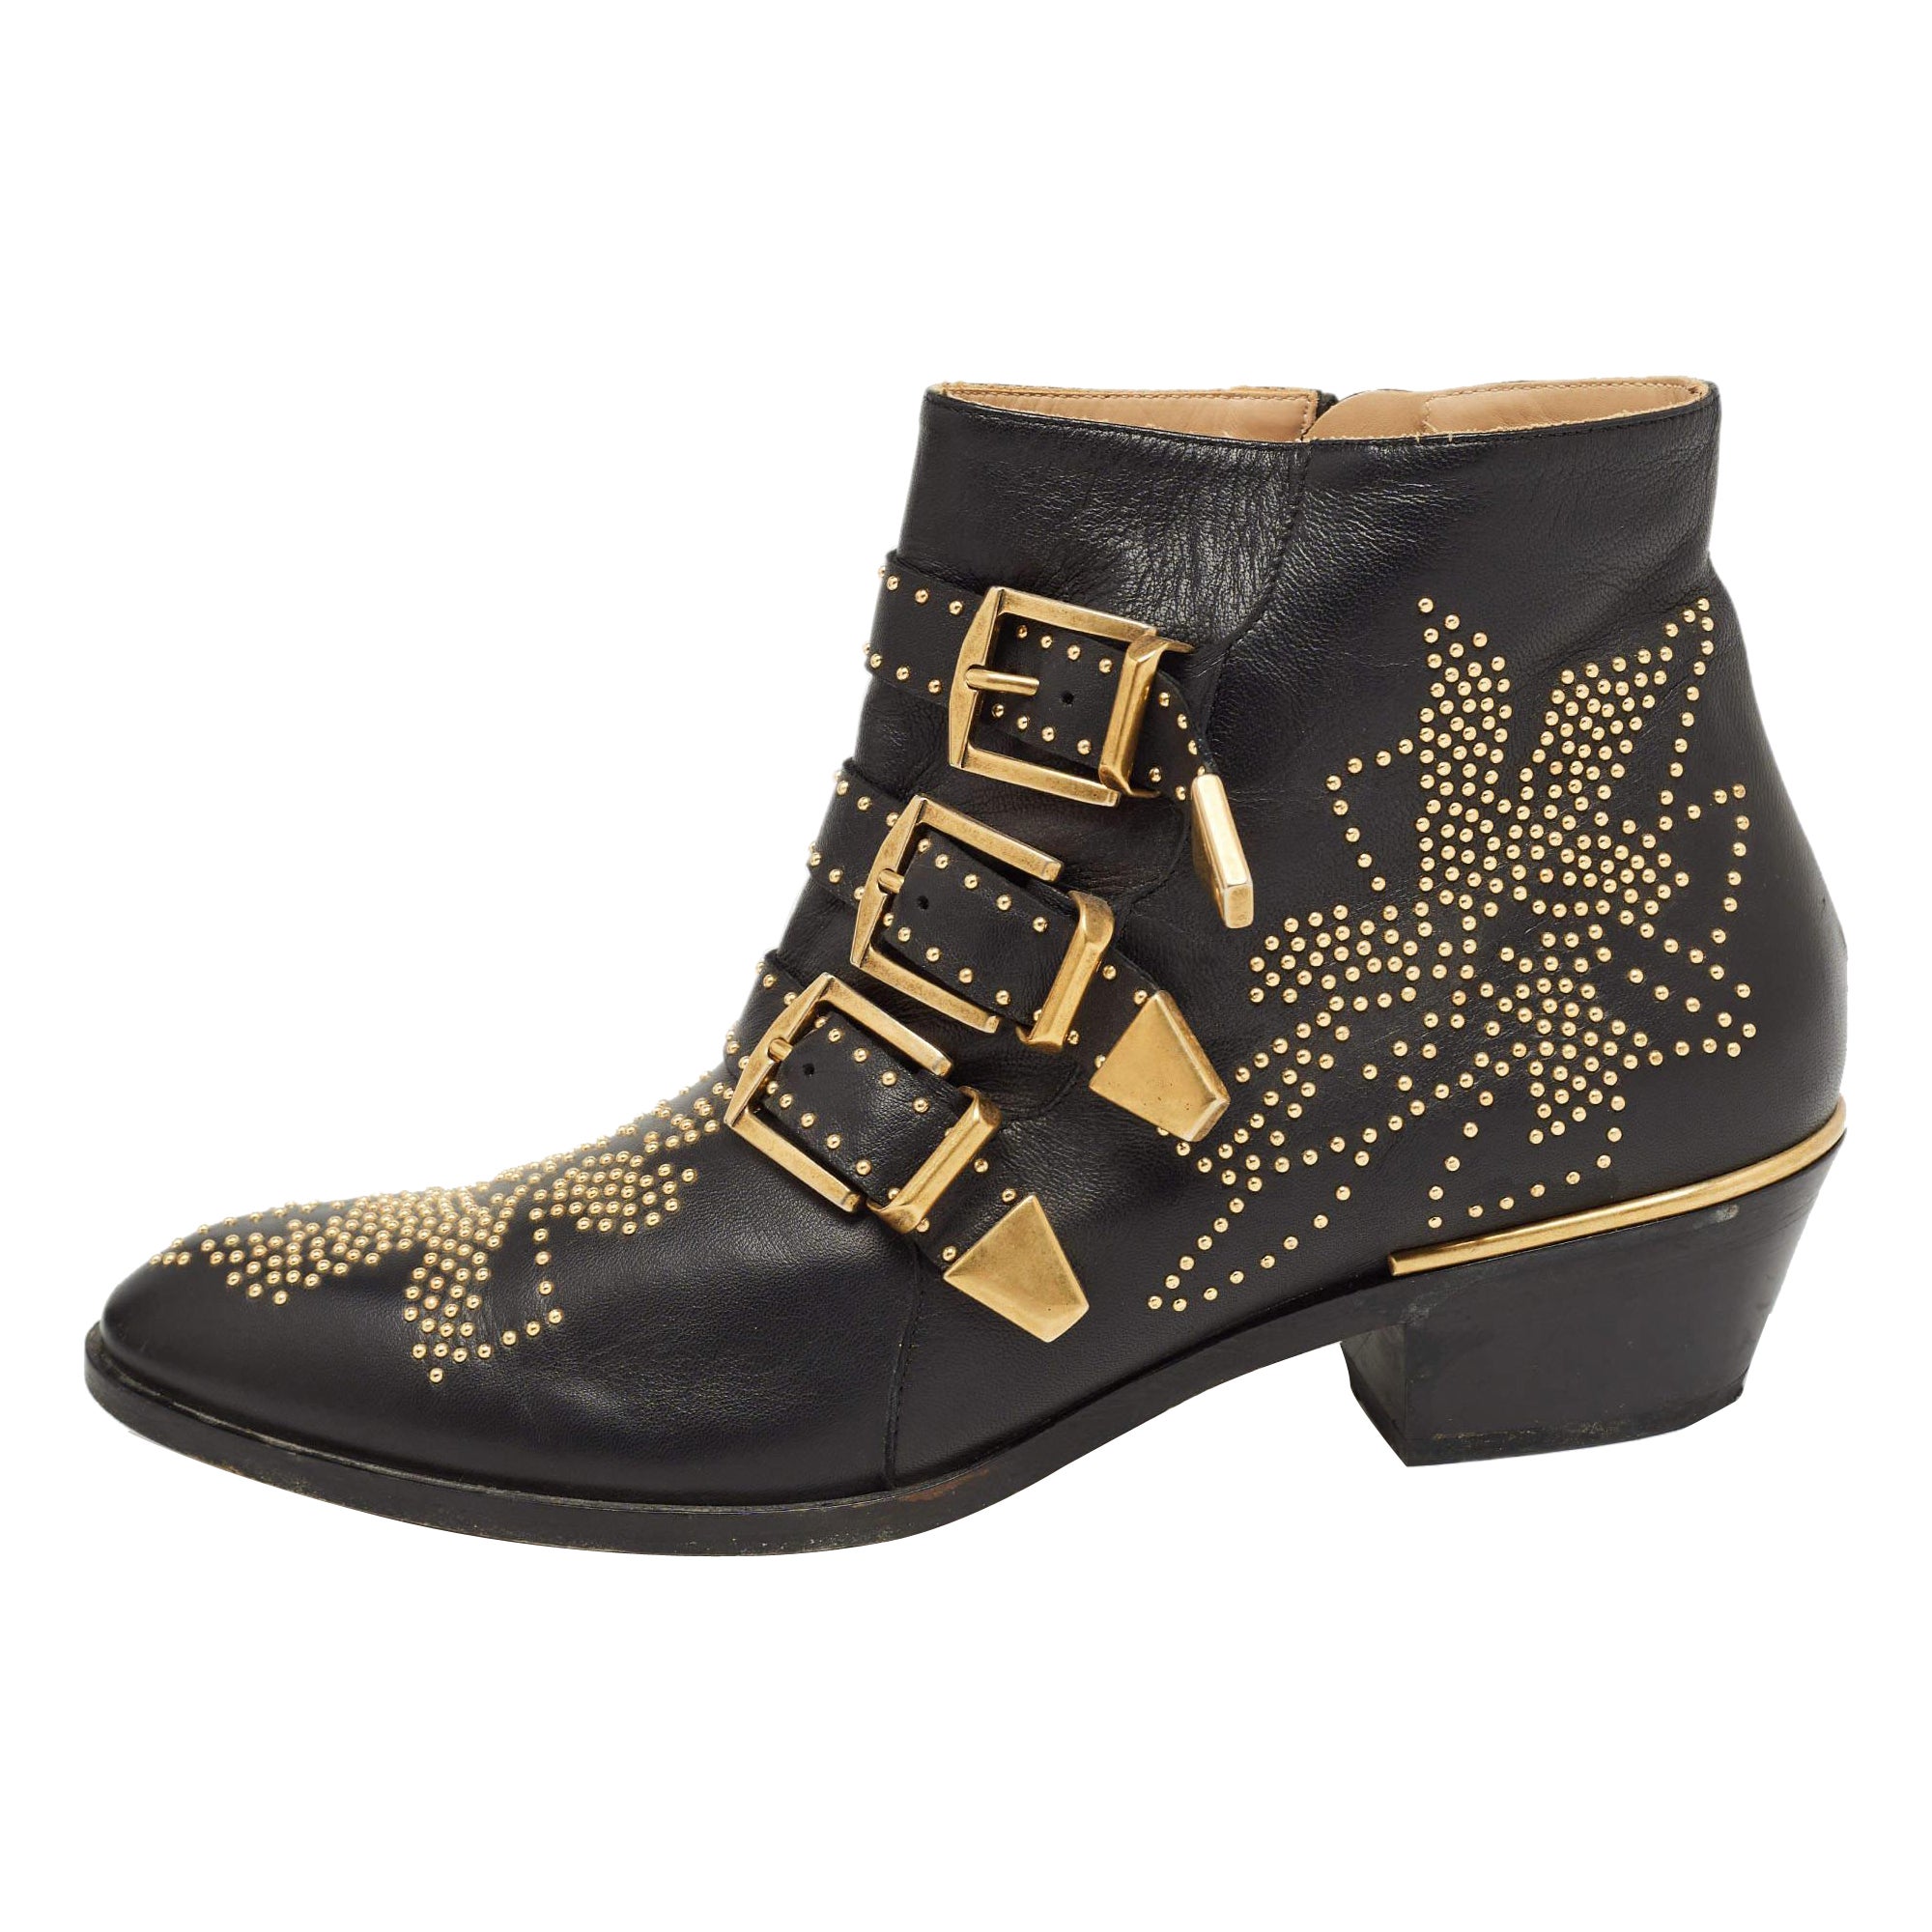 Chloe Black Leather Susanna Ankle Boots Size 39.5